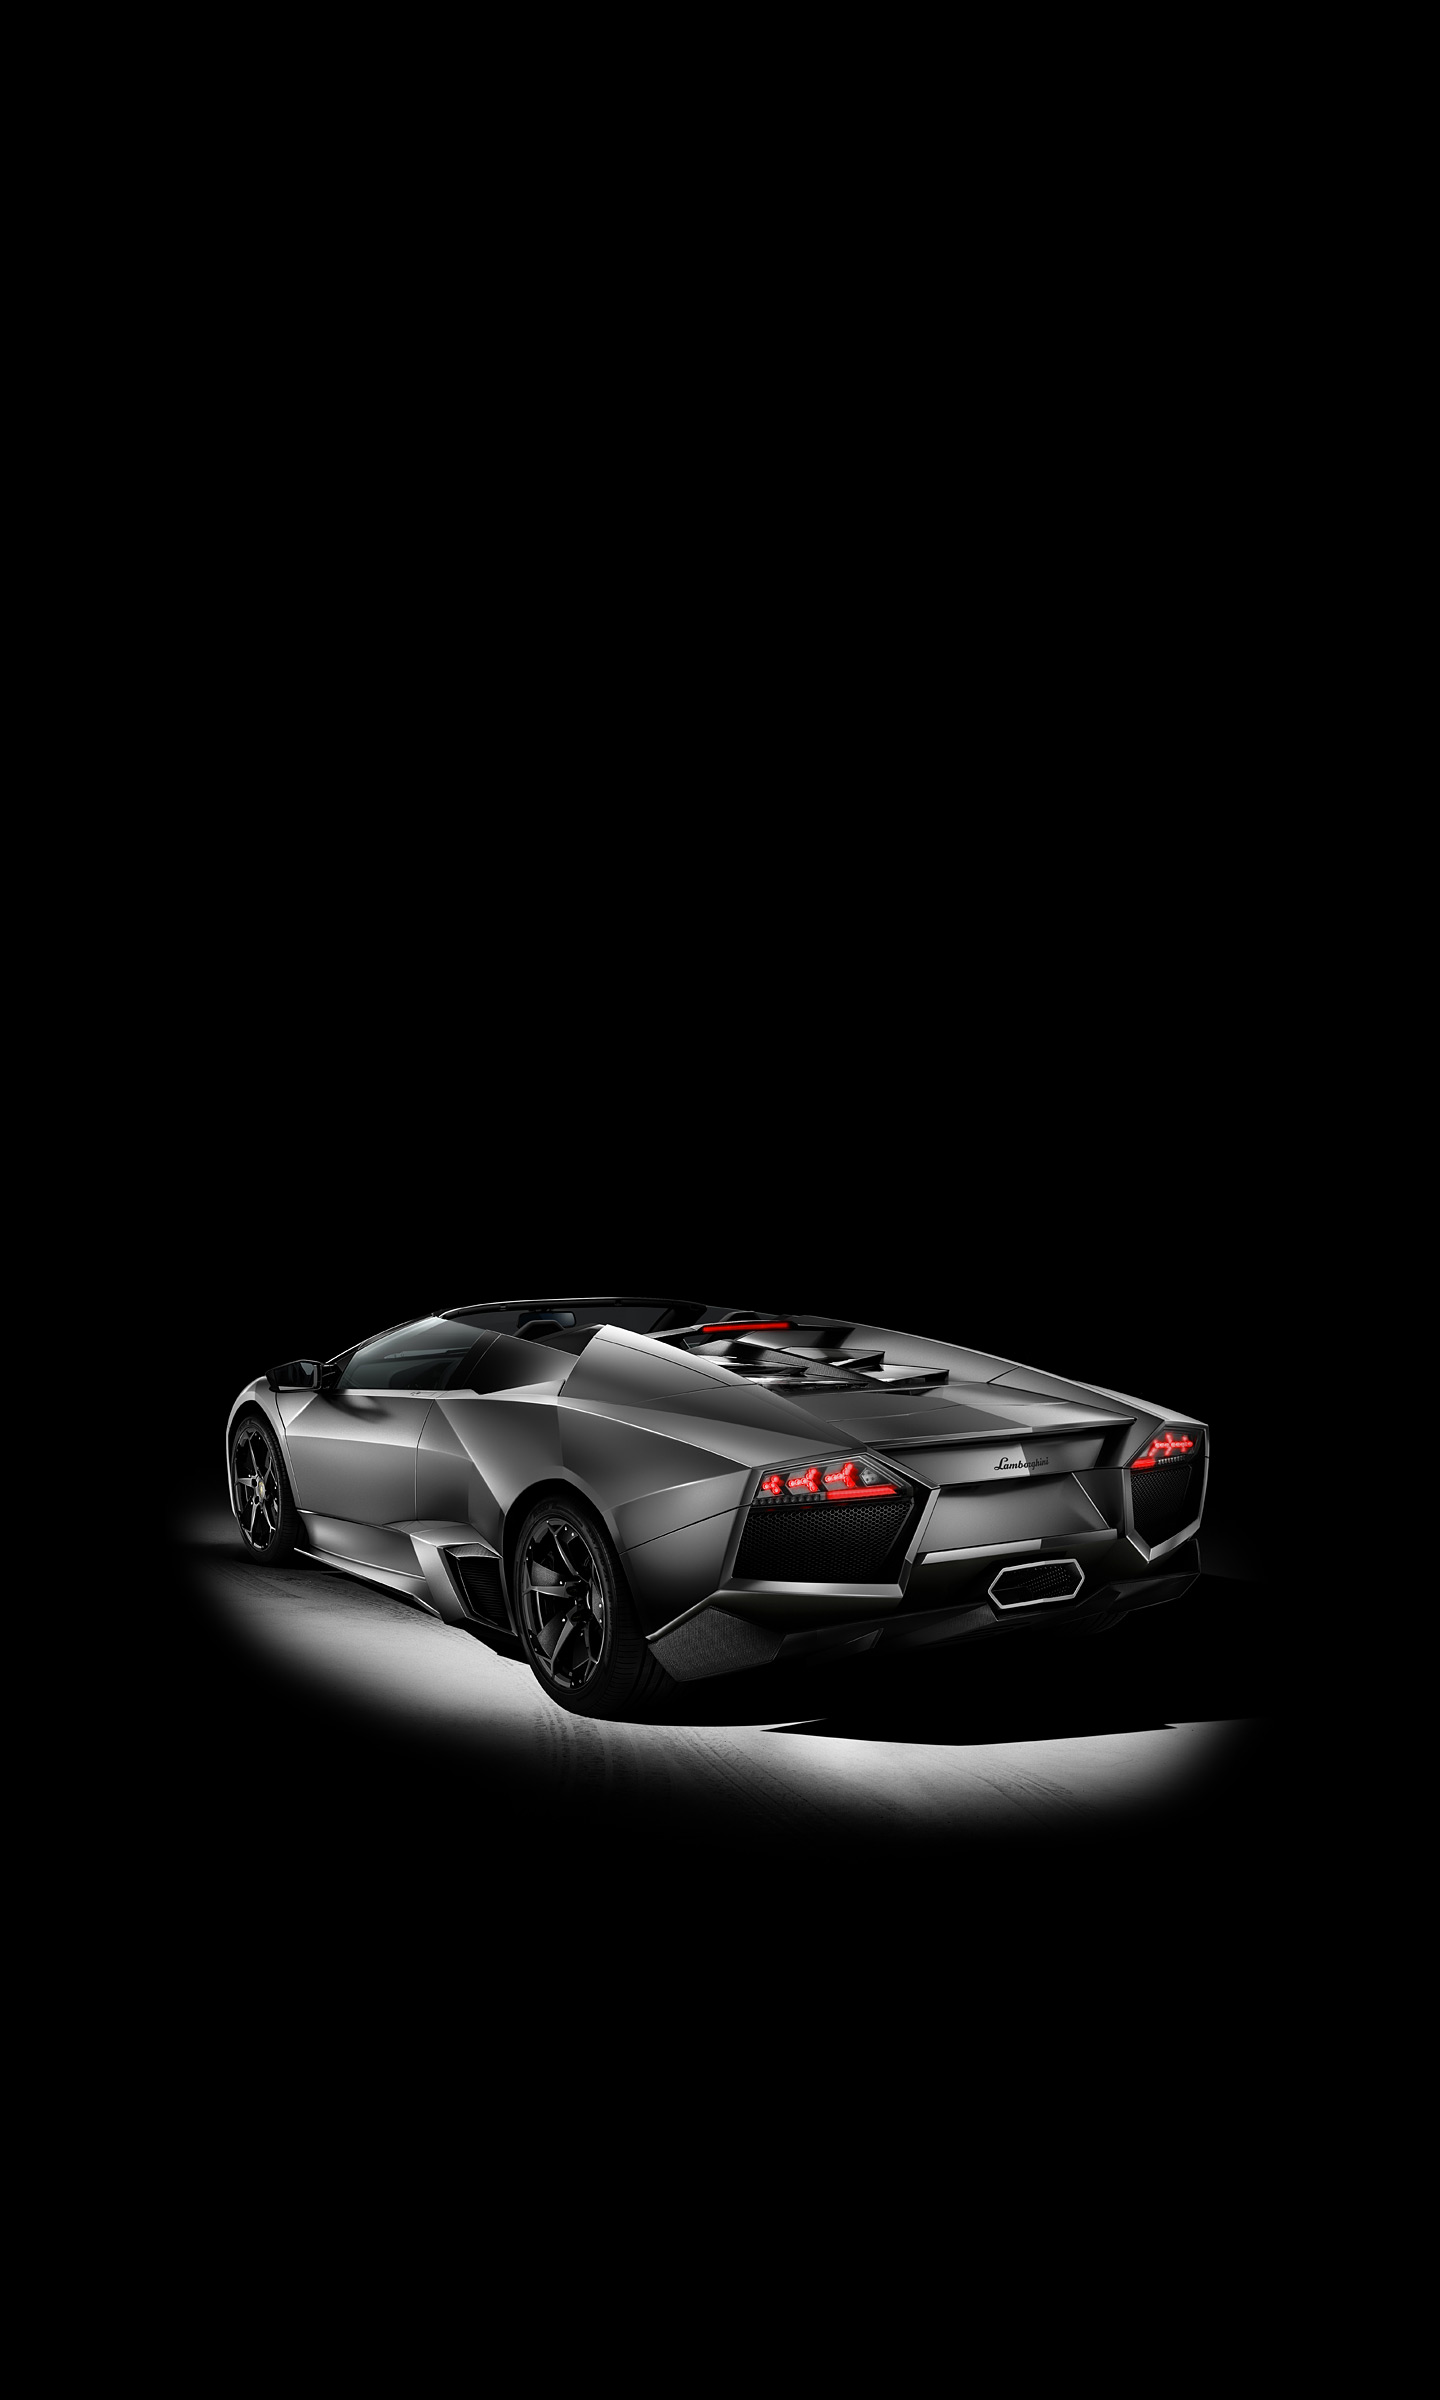  2010 Lamborghini Reventon Roadster Wallpaper.